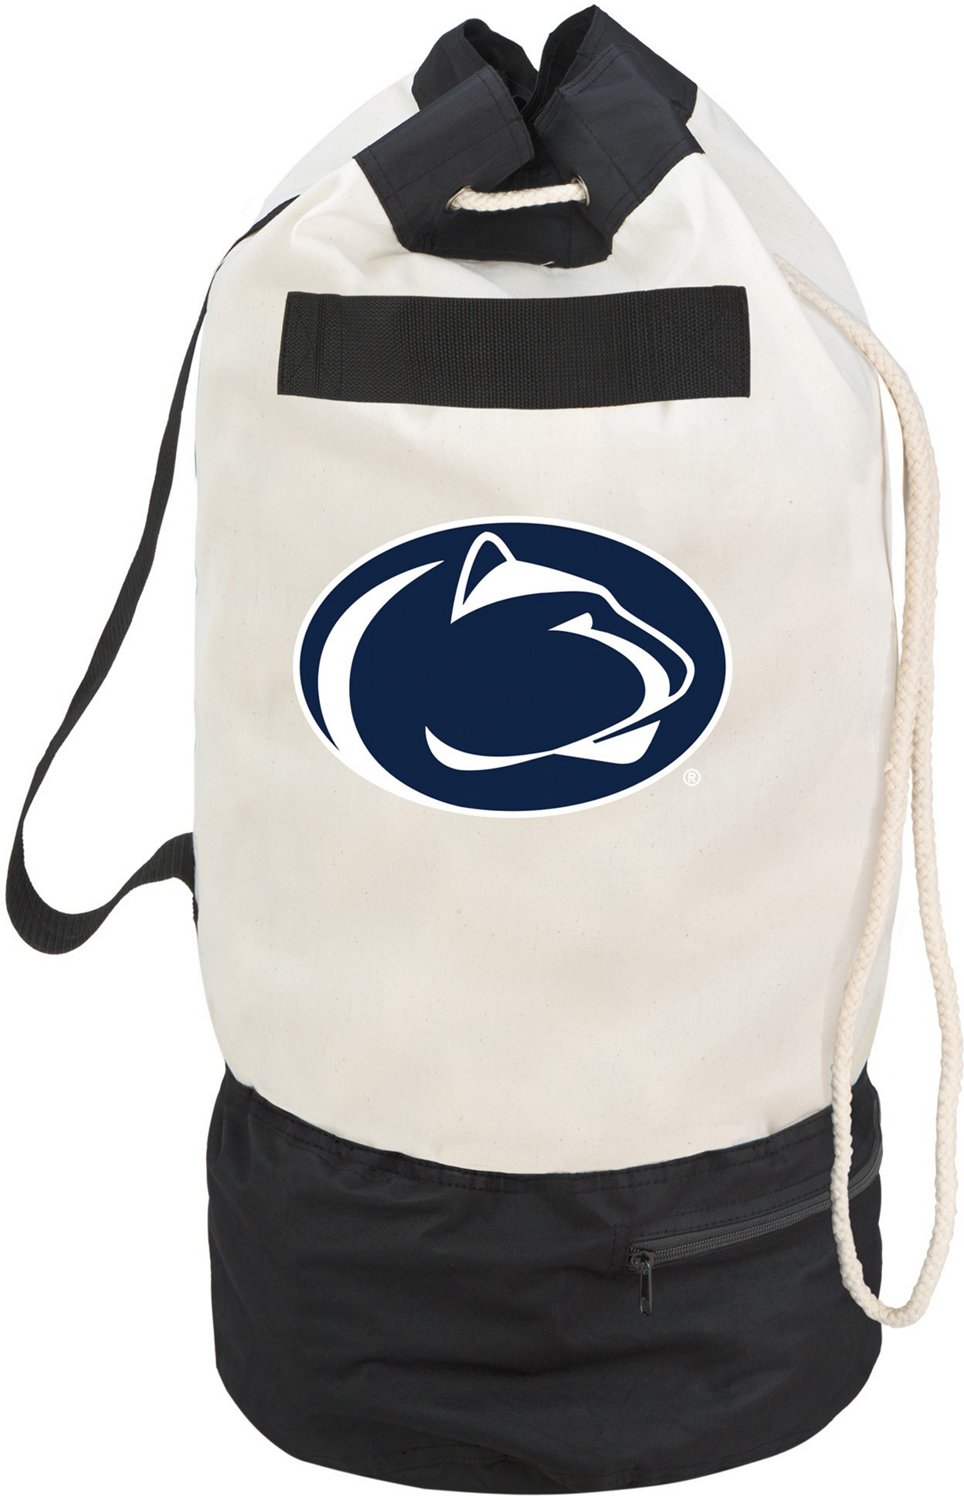 Smart Design Penn State University Heavy Duty Duffel Bag